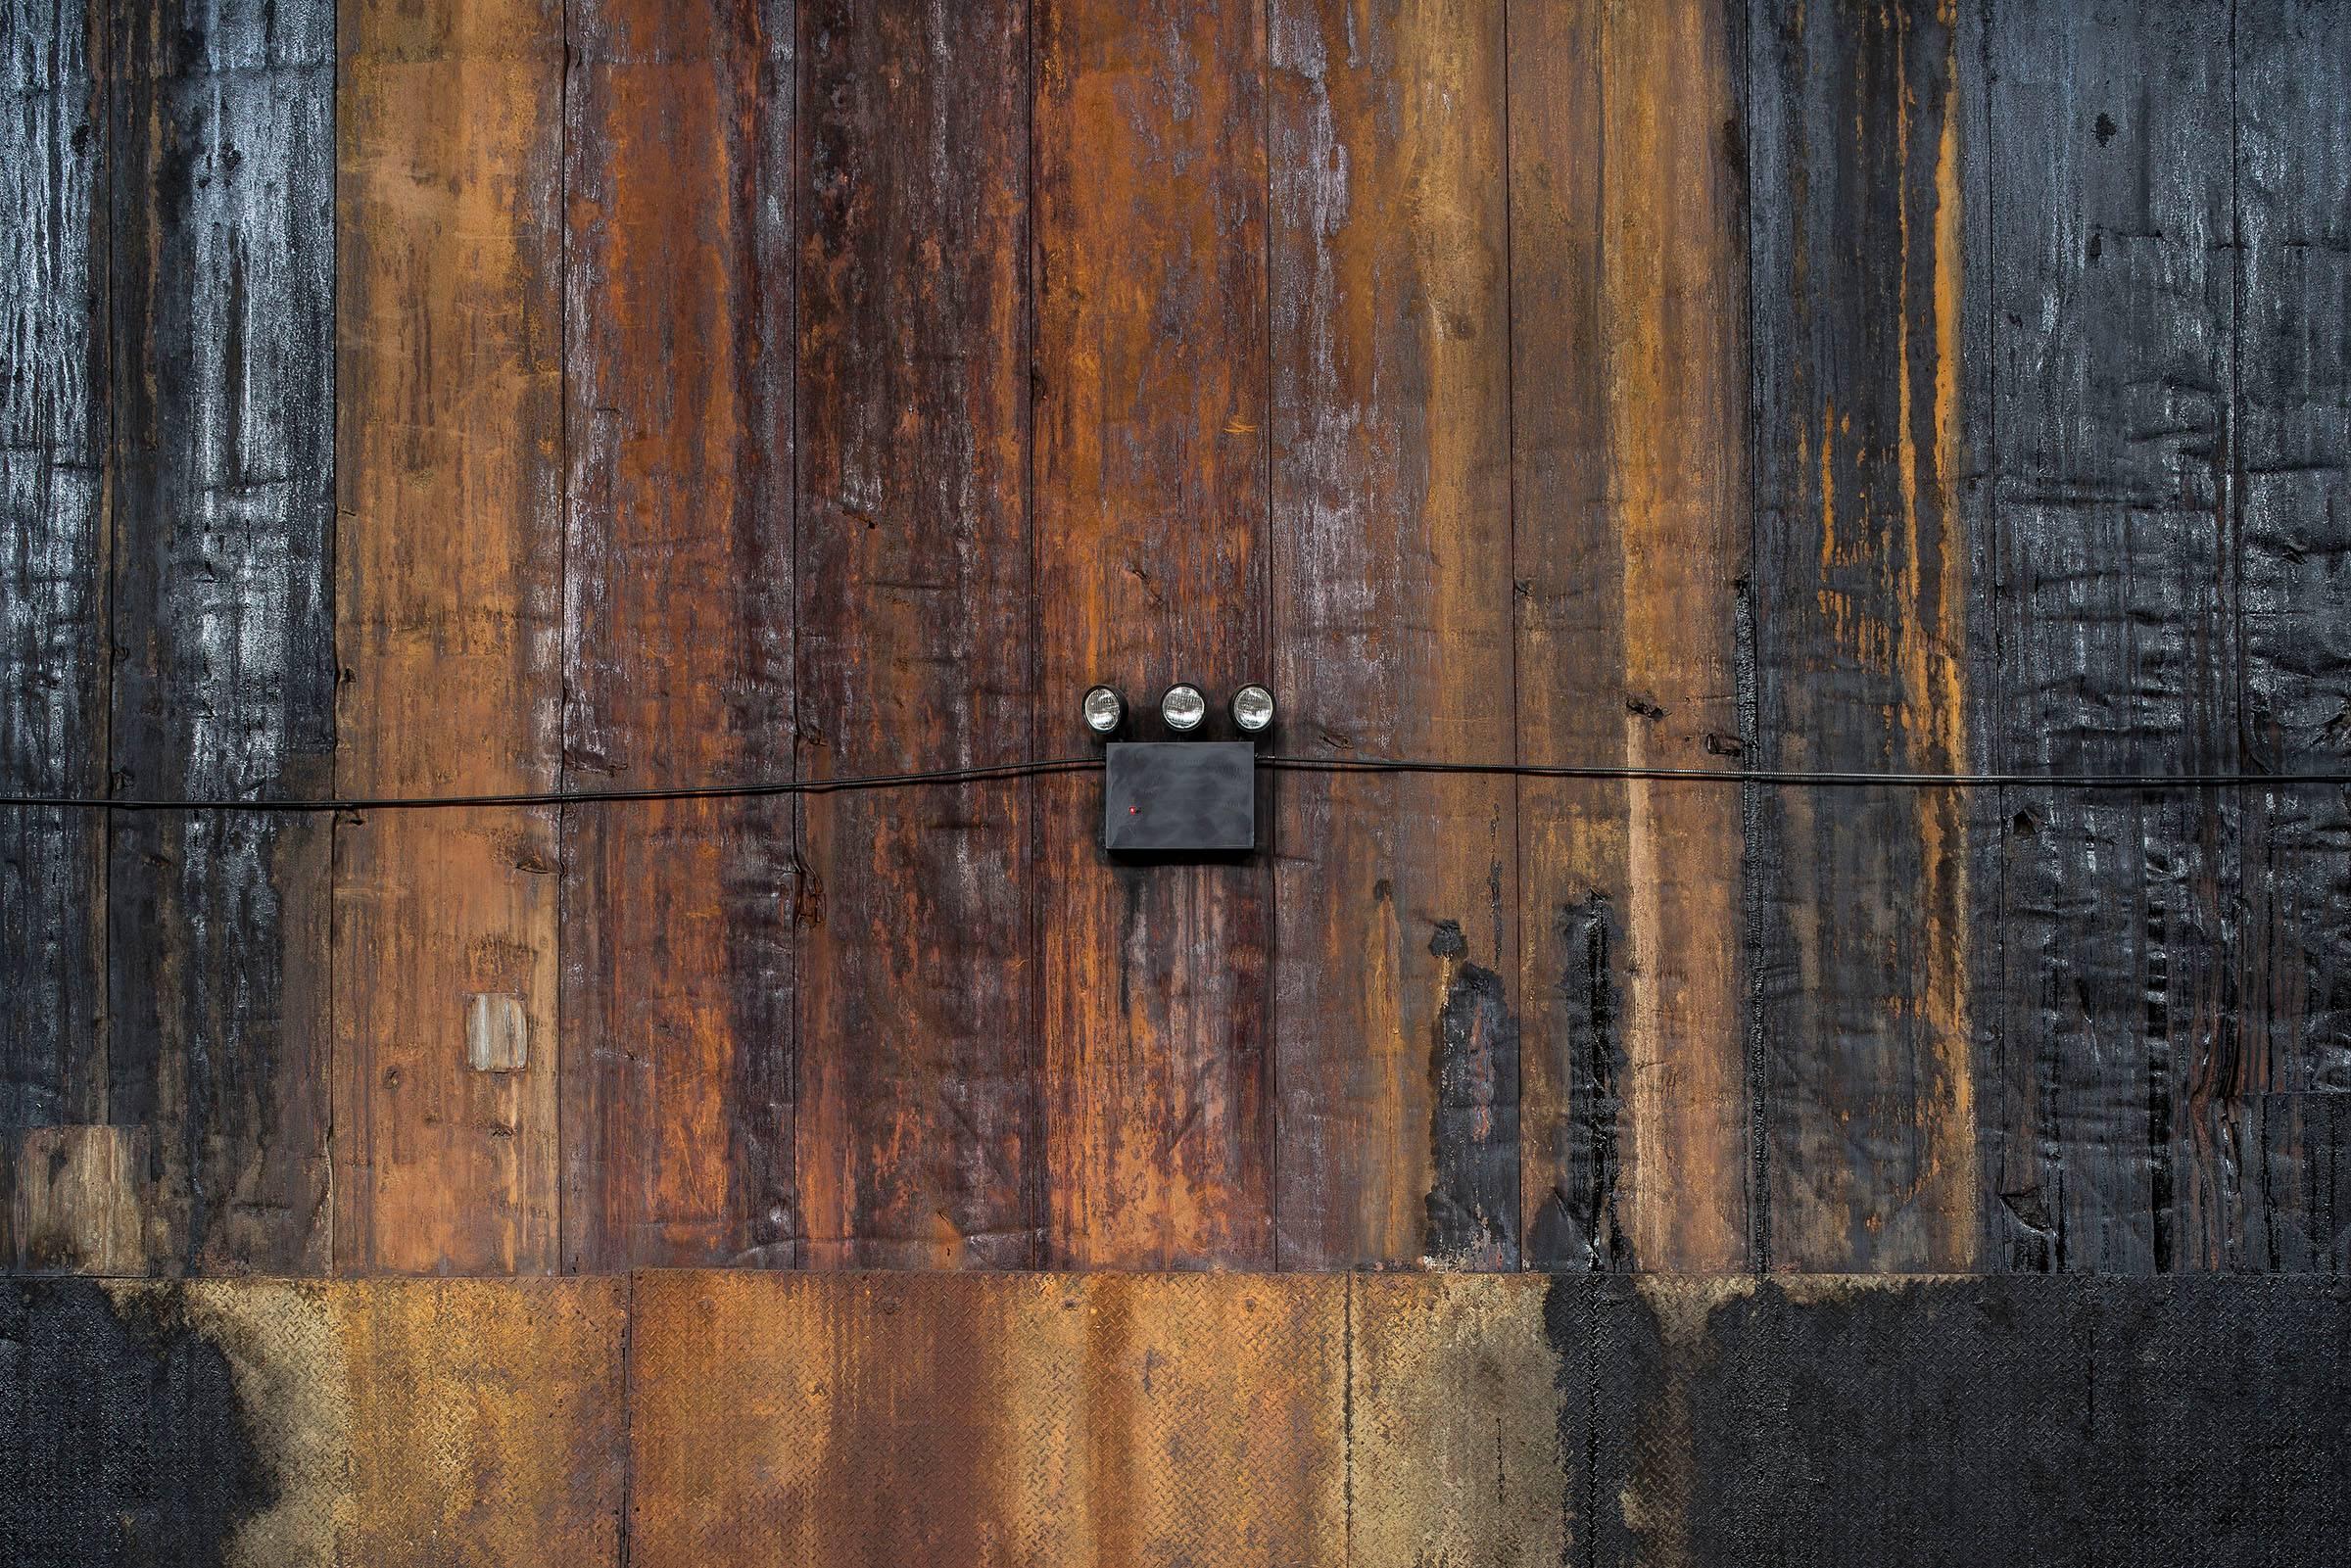 Paul Raphaelson Abstract Photograph - Raw Sugar Warehouse Wall